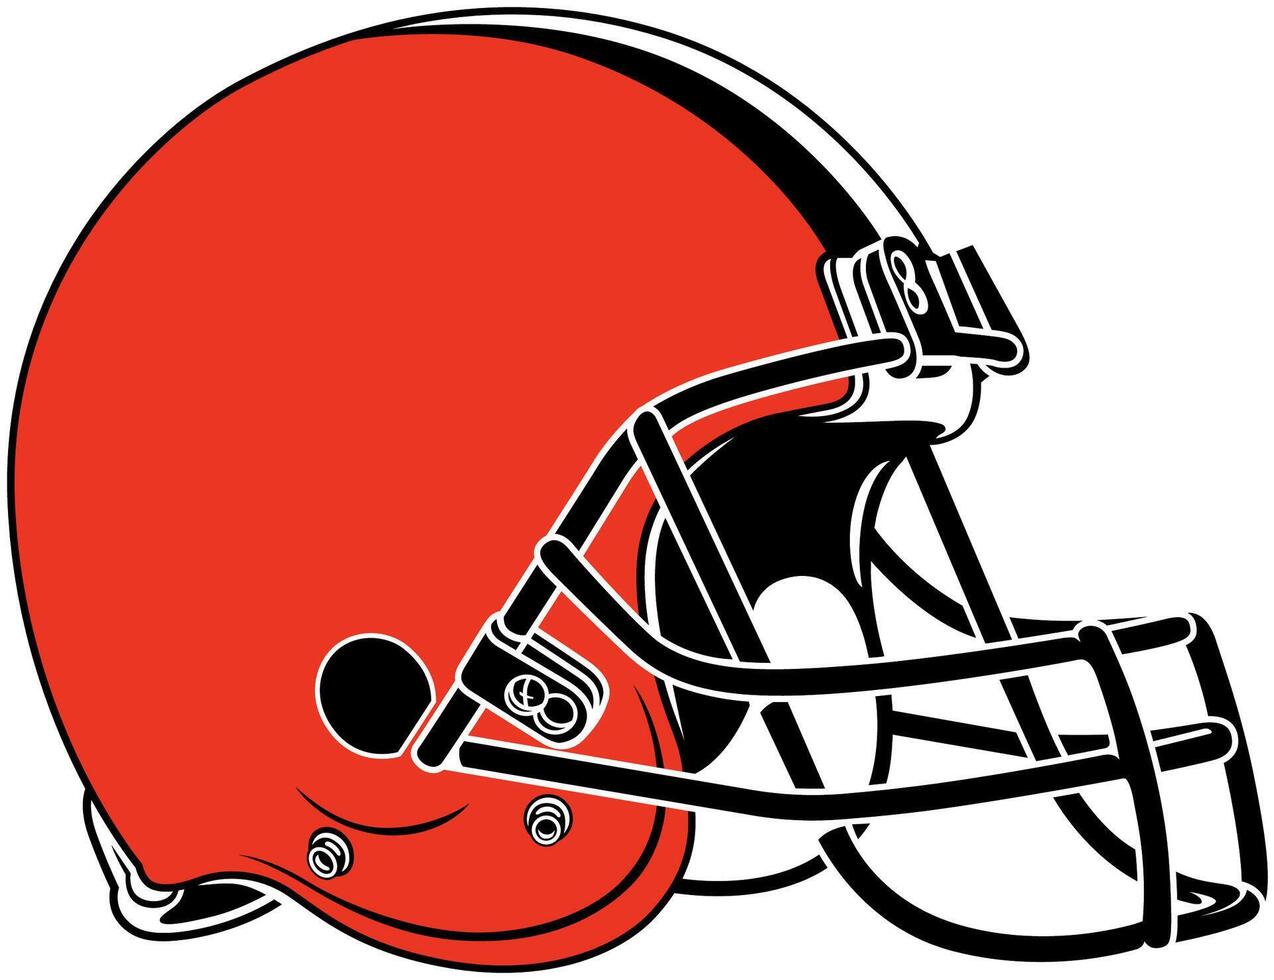 a laranja capacete do a Cleveland marrons americano futebol equipe vetor